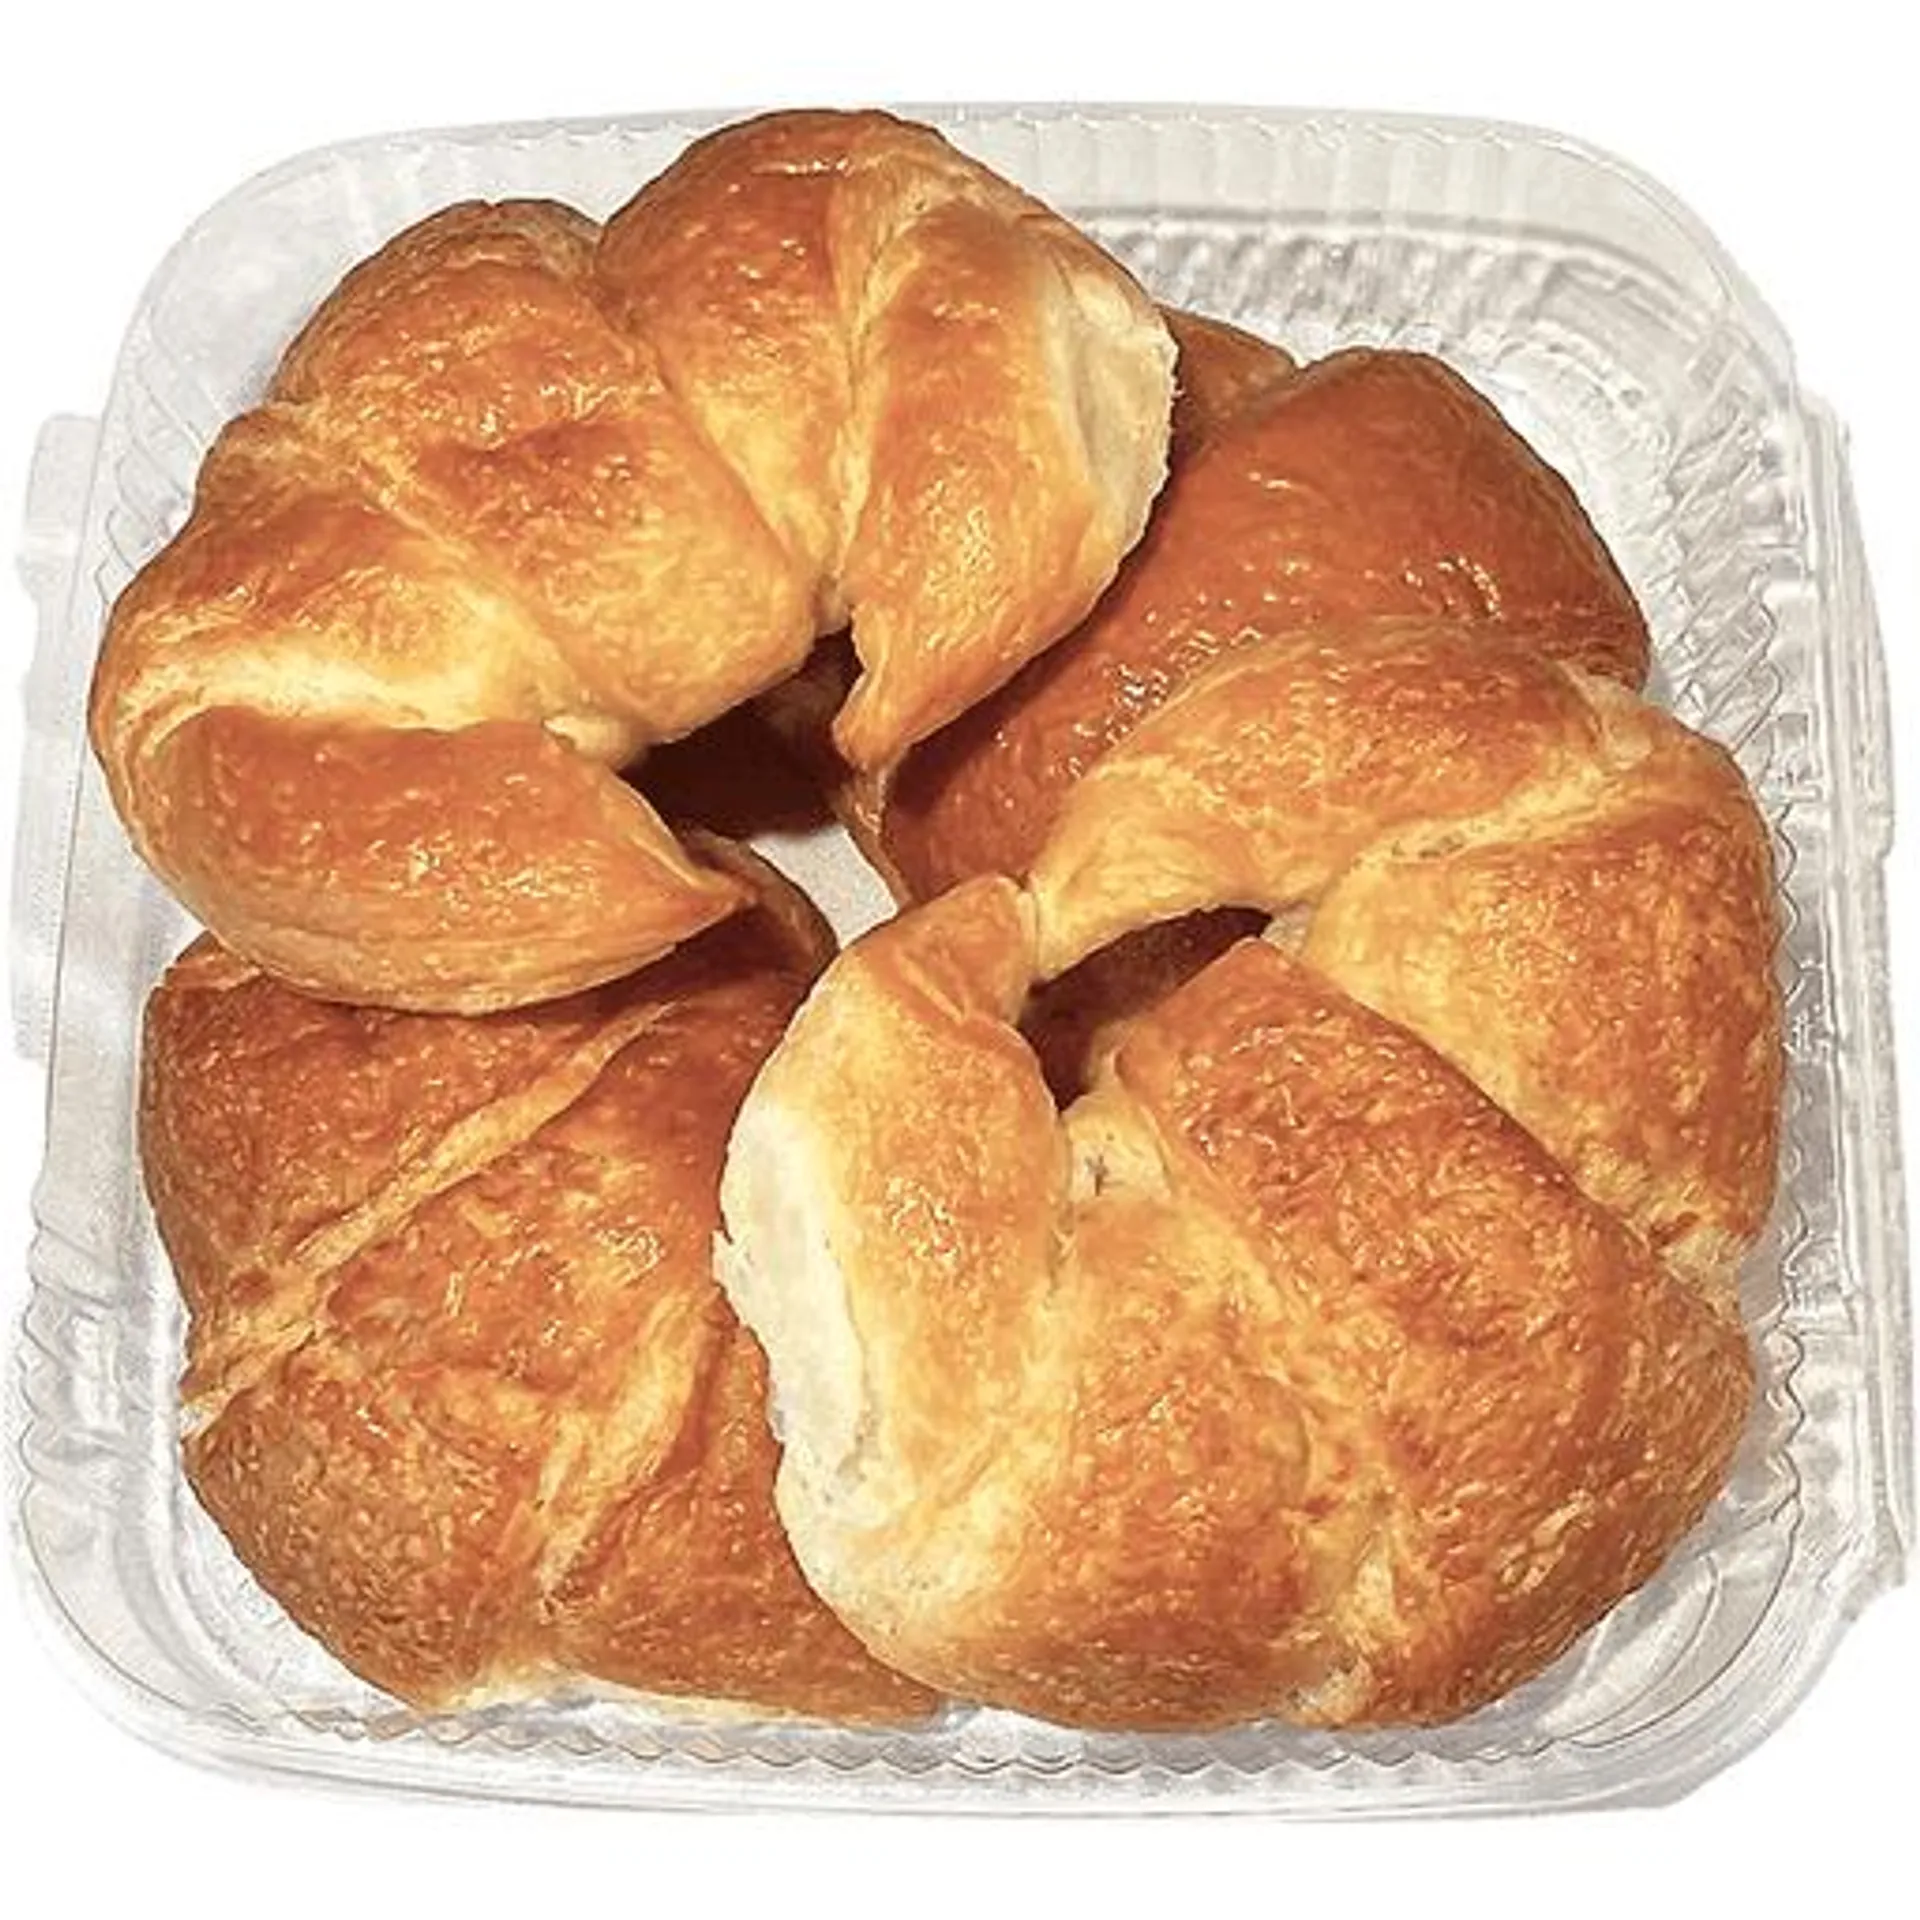 Fresh Baked Plain Croissant 4 ct